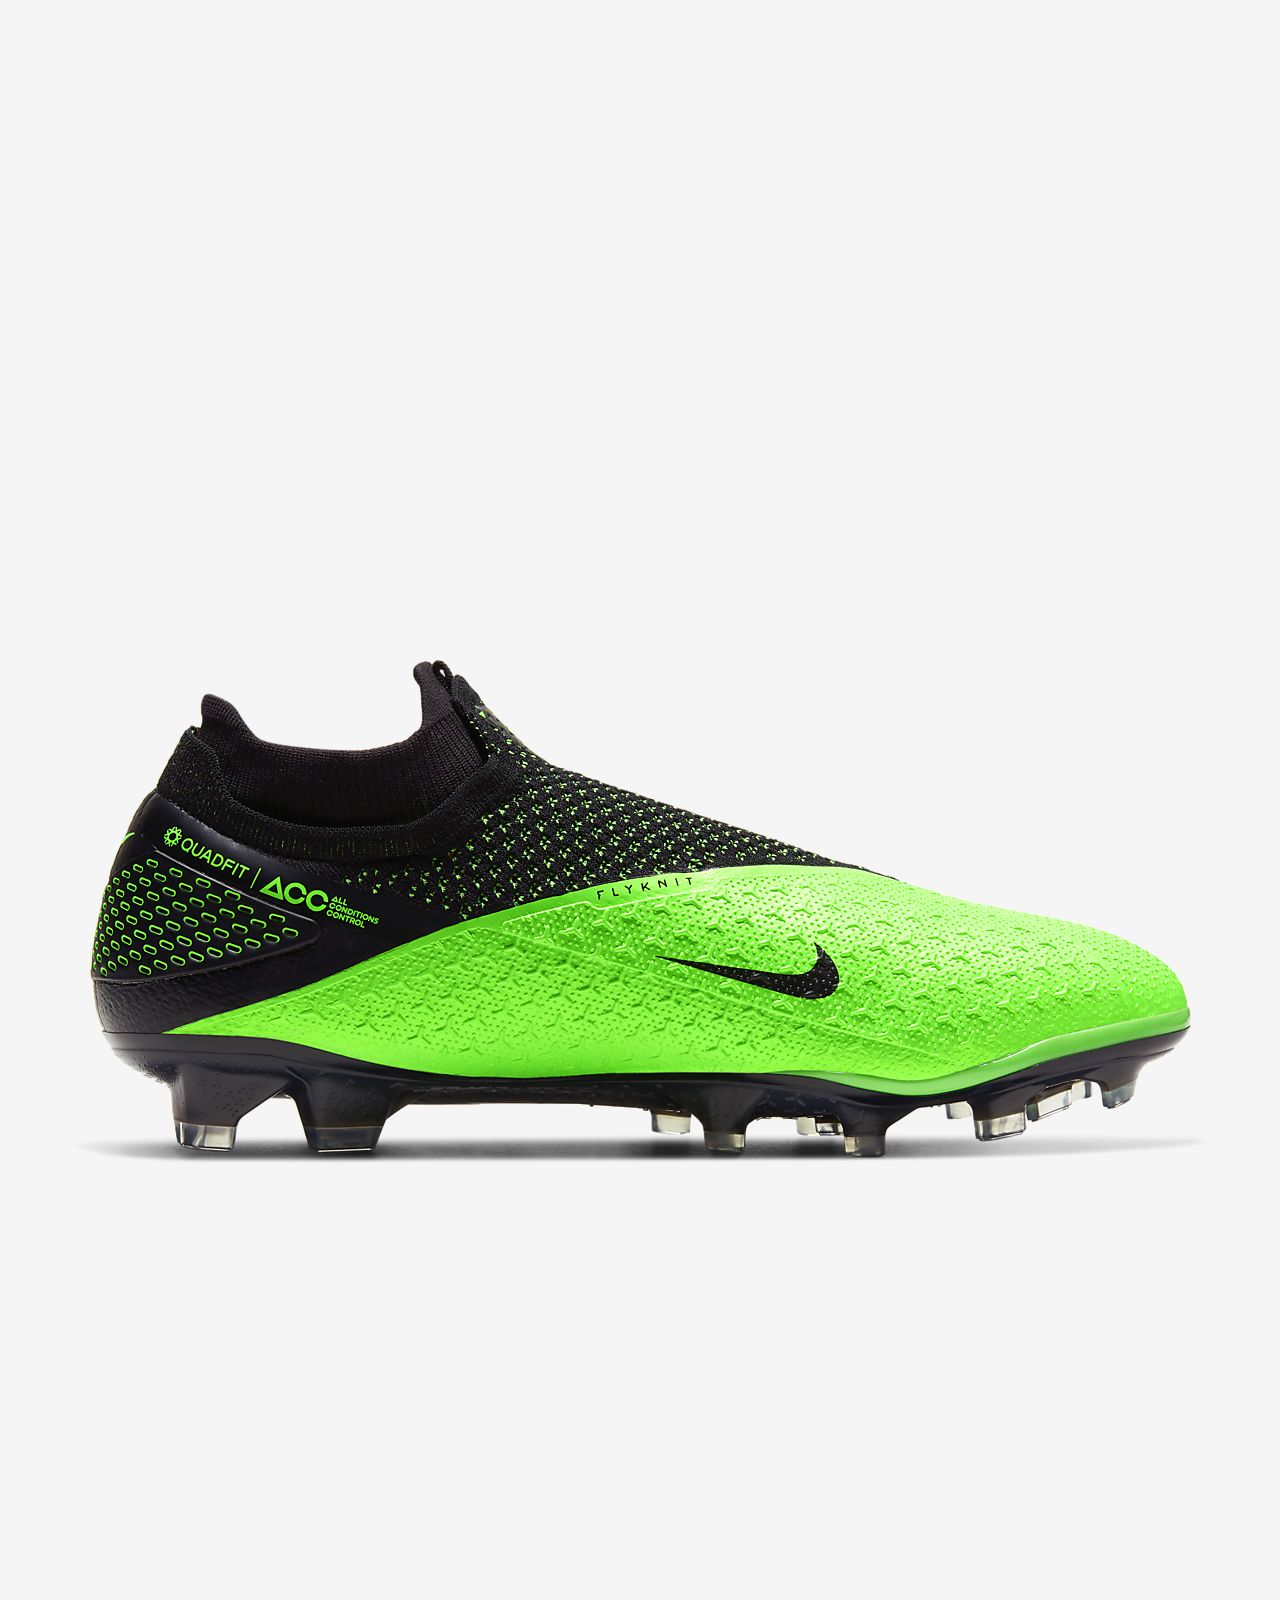 Fresh Nike Phantom Vision Pro Turf Soccer Shoe . Pinterest